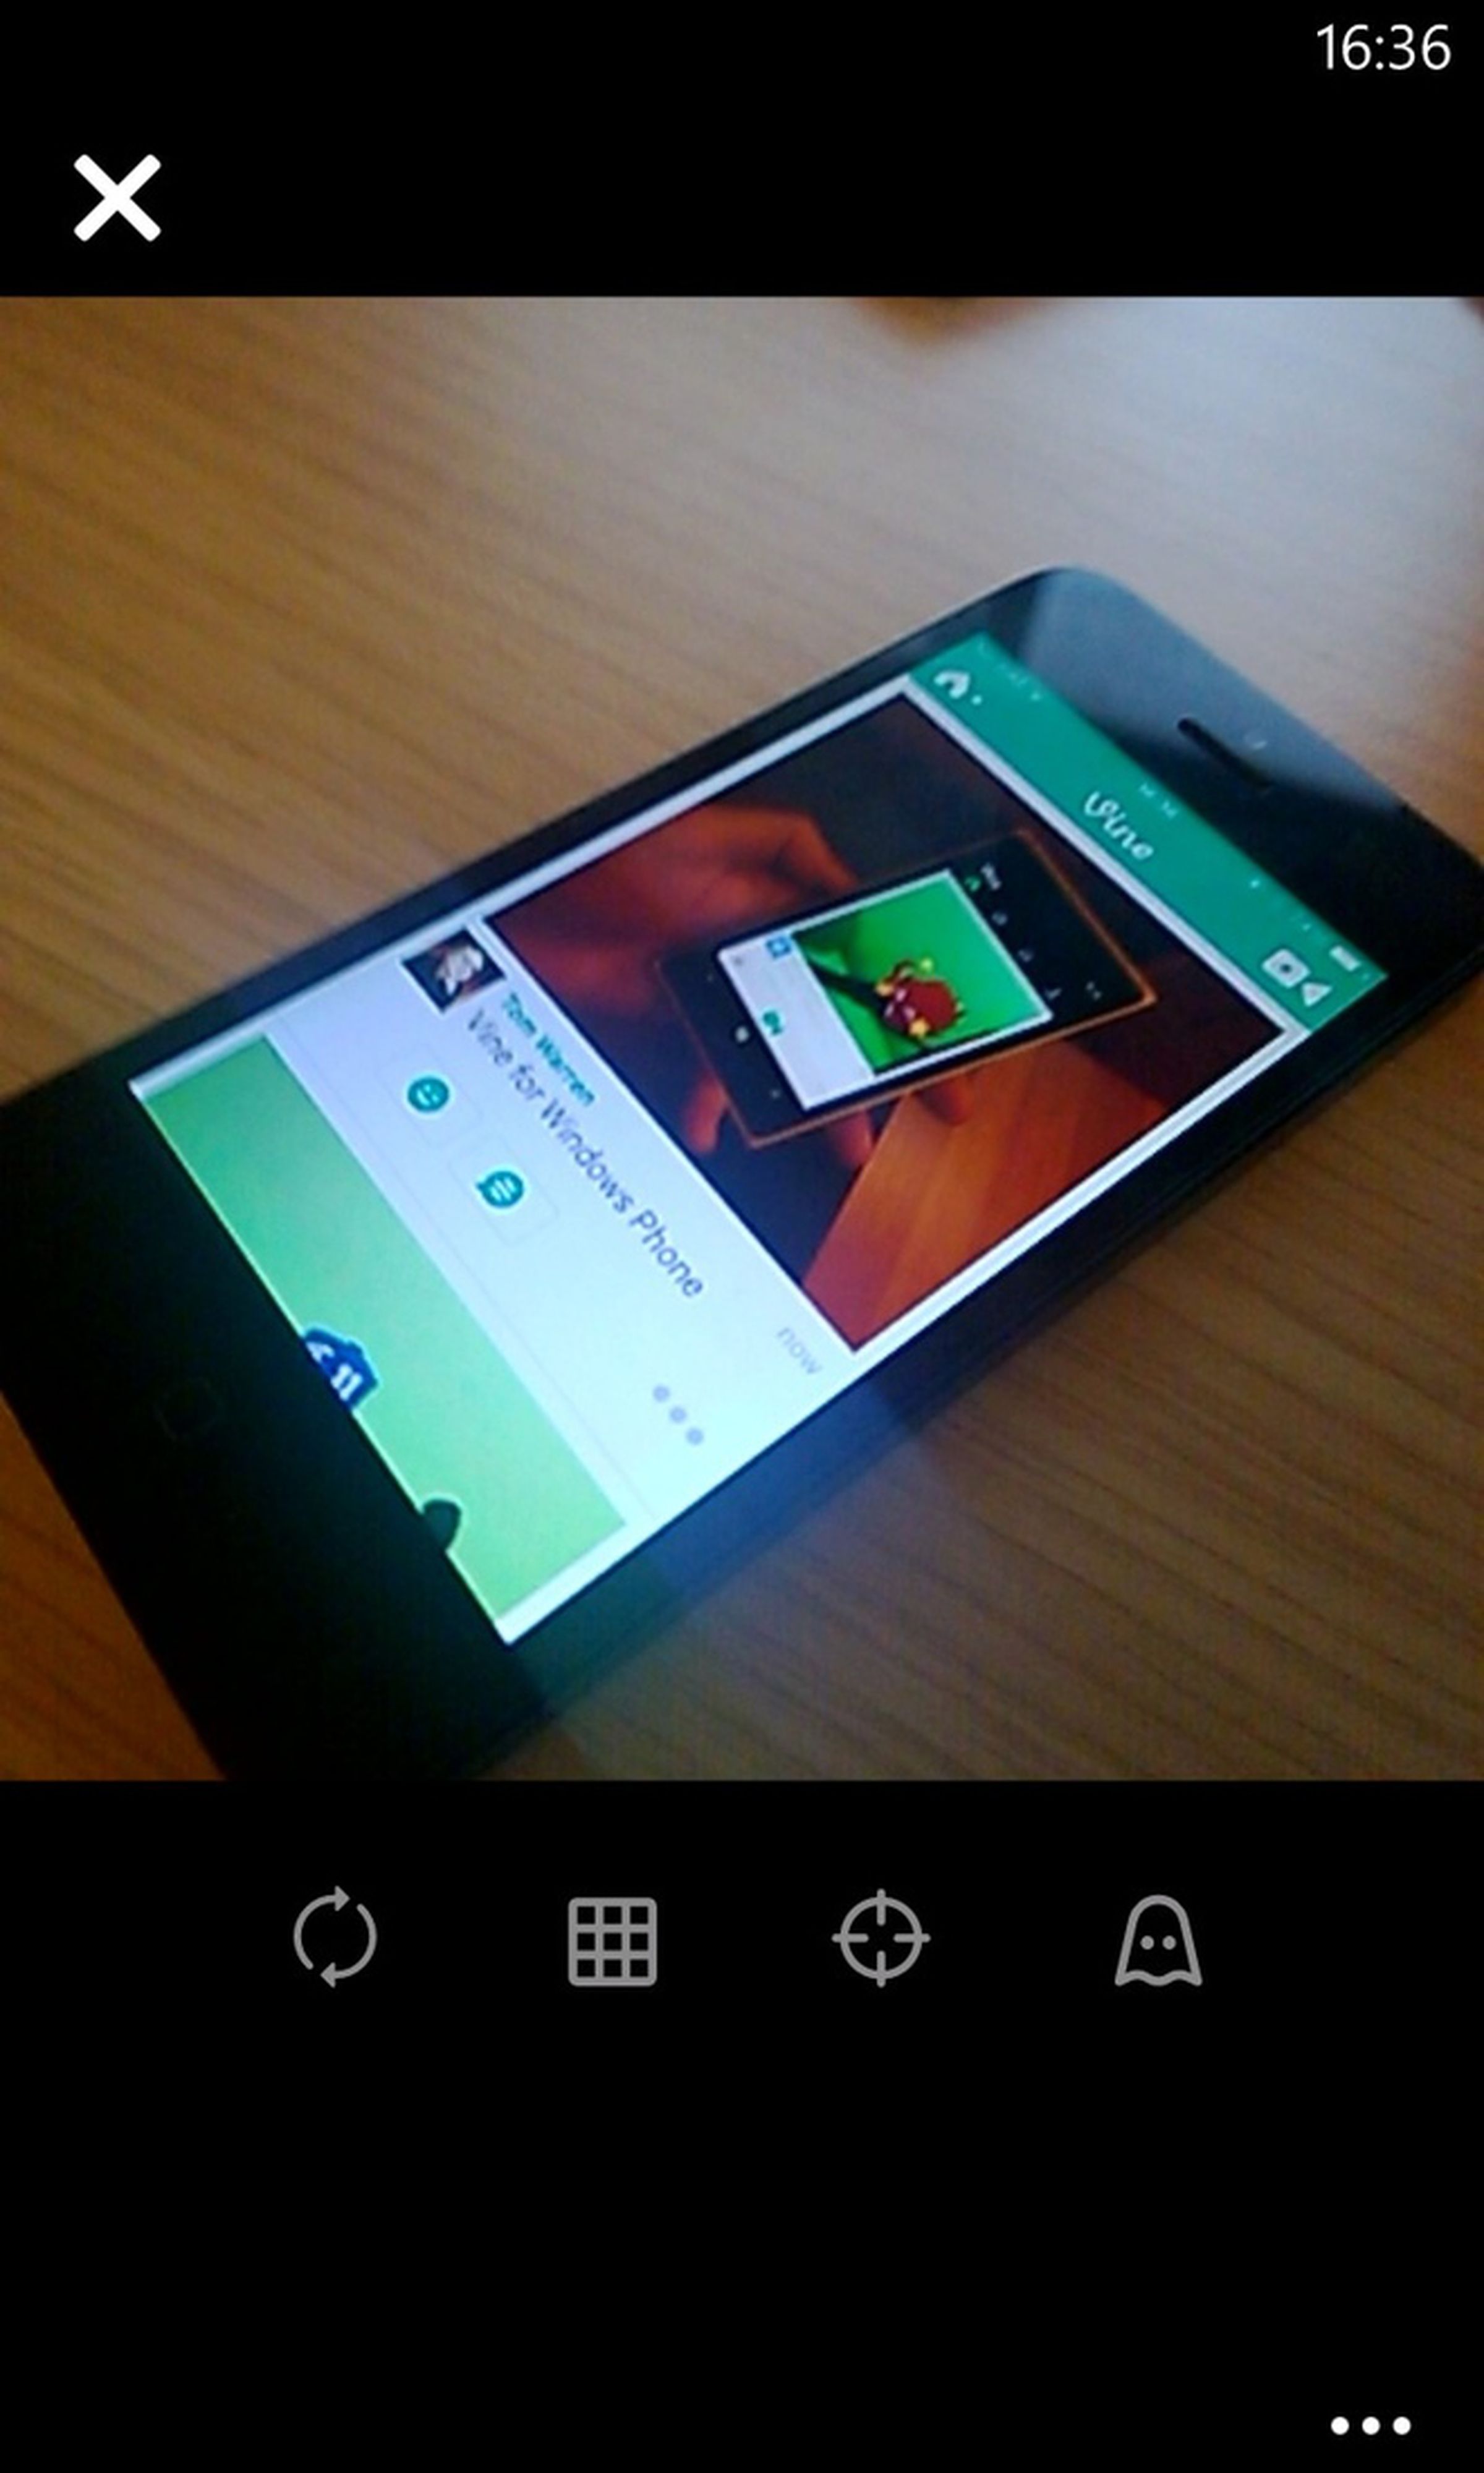 Vine for Windows Phone screenshots